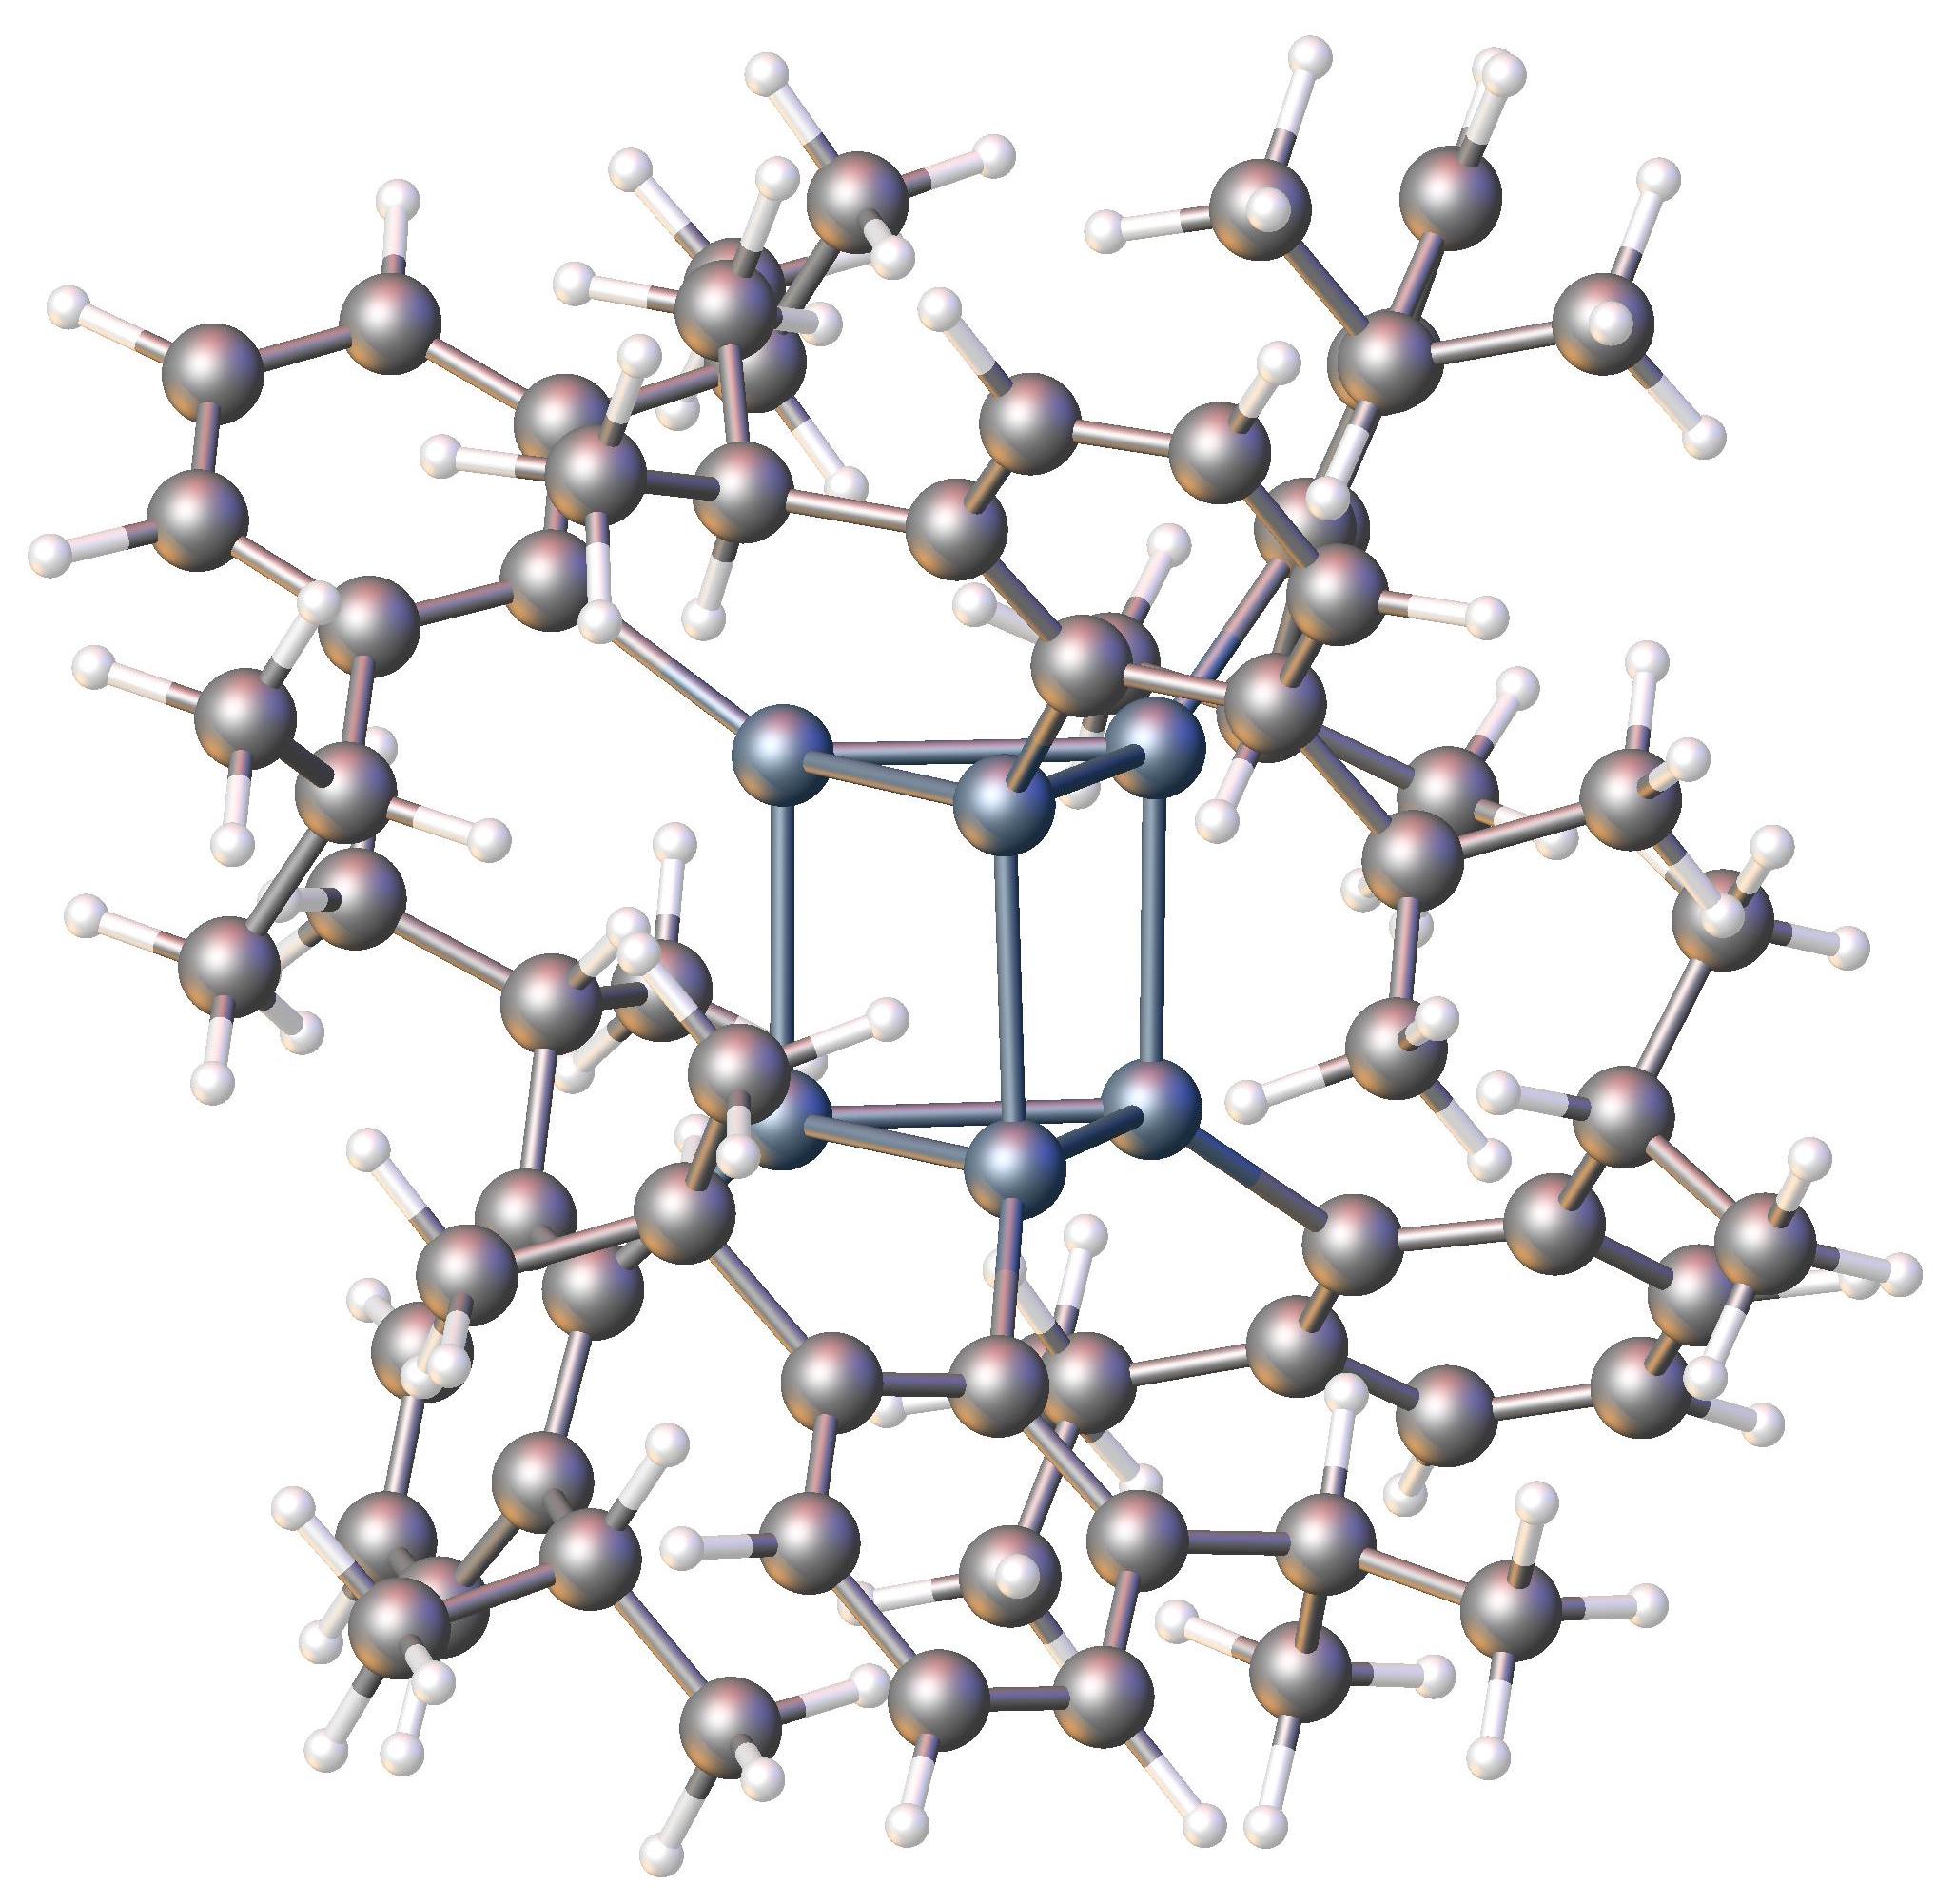 Organocerium chemistry - Wikipedia